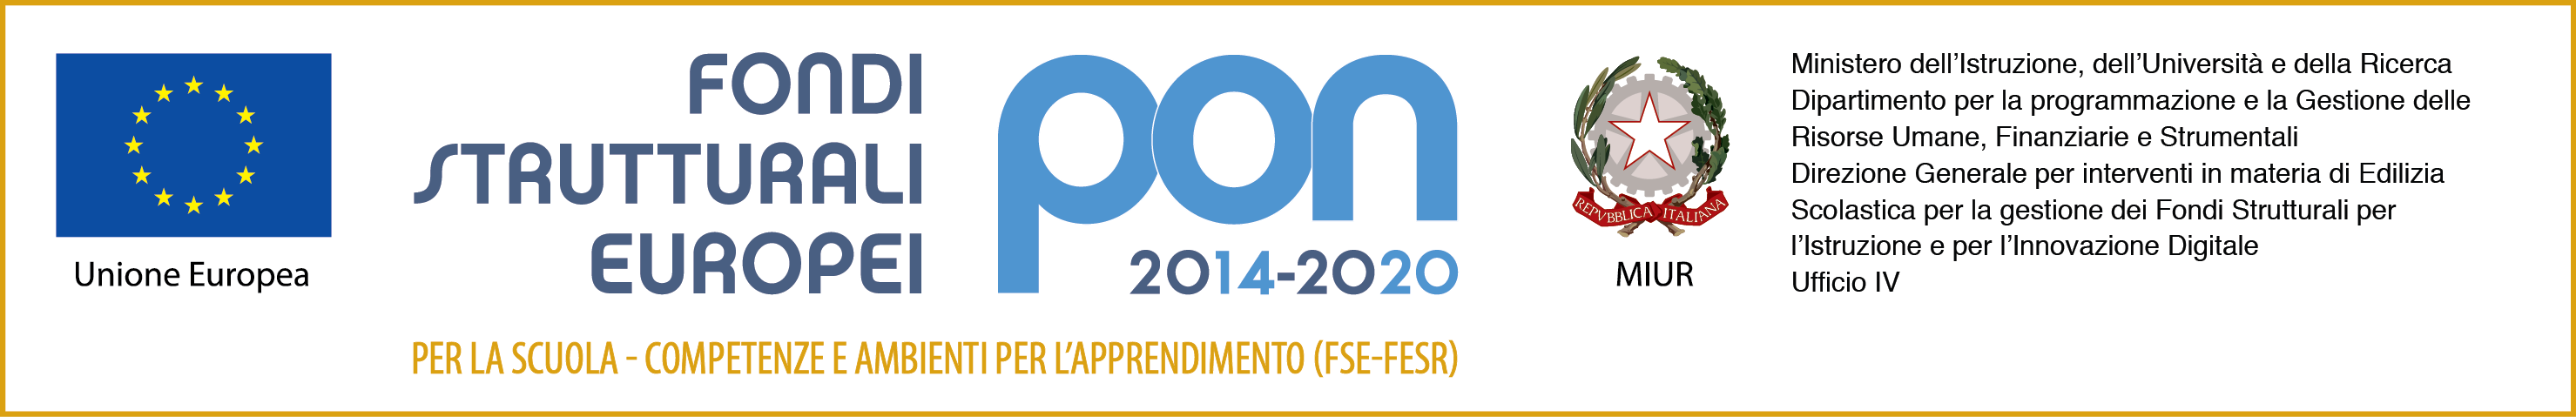 banner PON fsefesr 2014 2020